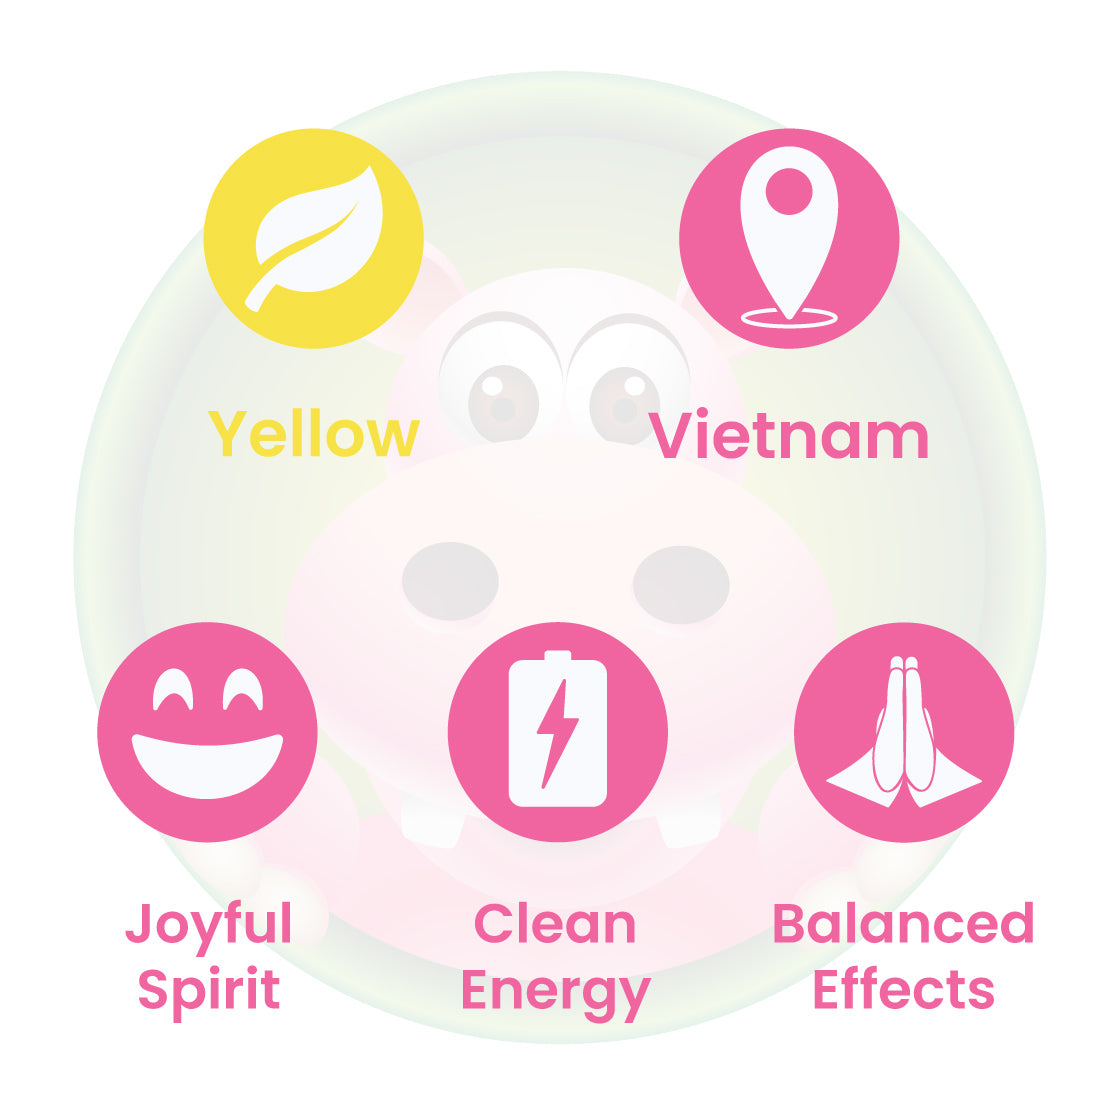 Infographic Details for Happy Hippo Yellow Vietnam Kratom Powder. Leaf color: Yellow Vein. Kratom Strain Origin: Vietnam. Kratom Effects resonate with Clean Energy, Balanced Effects, and Joyful Spirit.